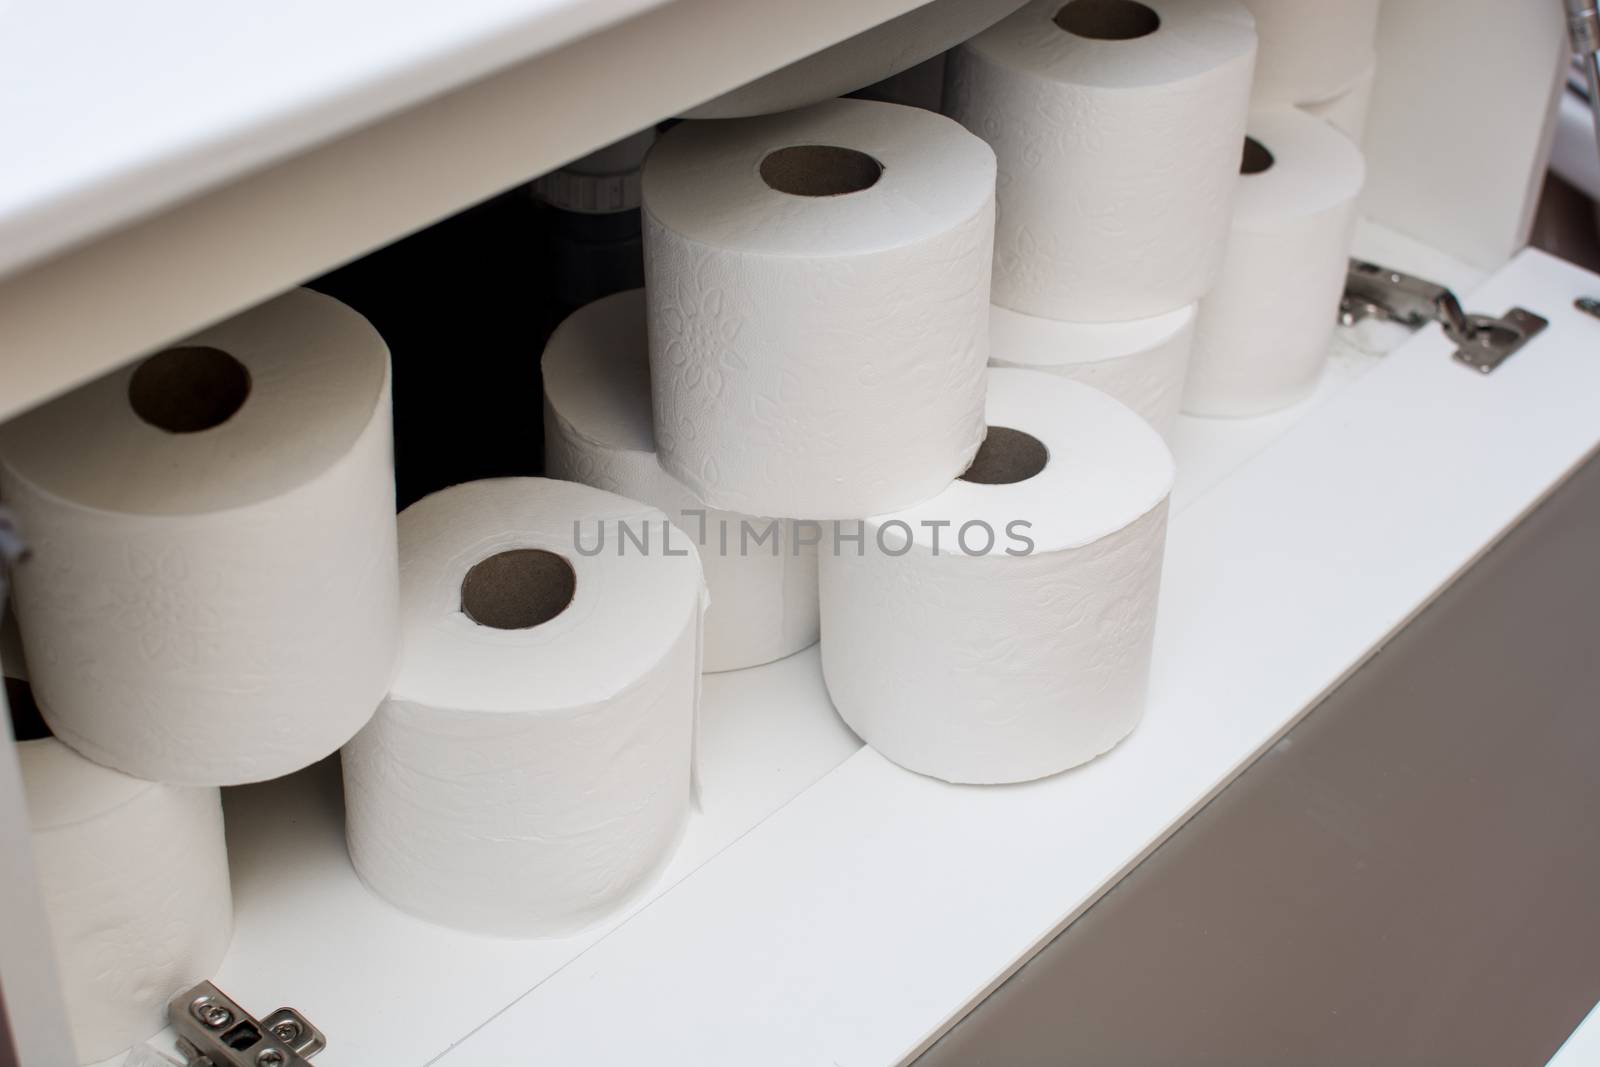 Paper rolls in bathroom furniture by chandlervid85